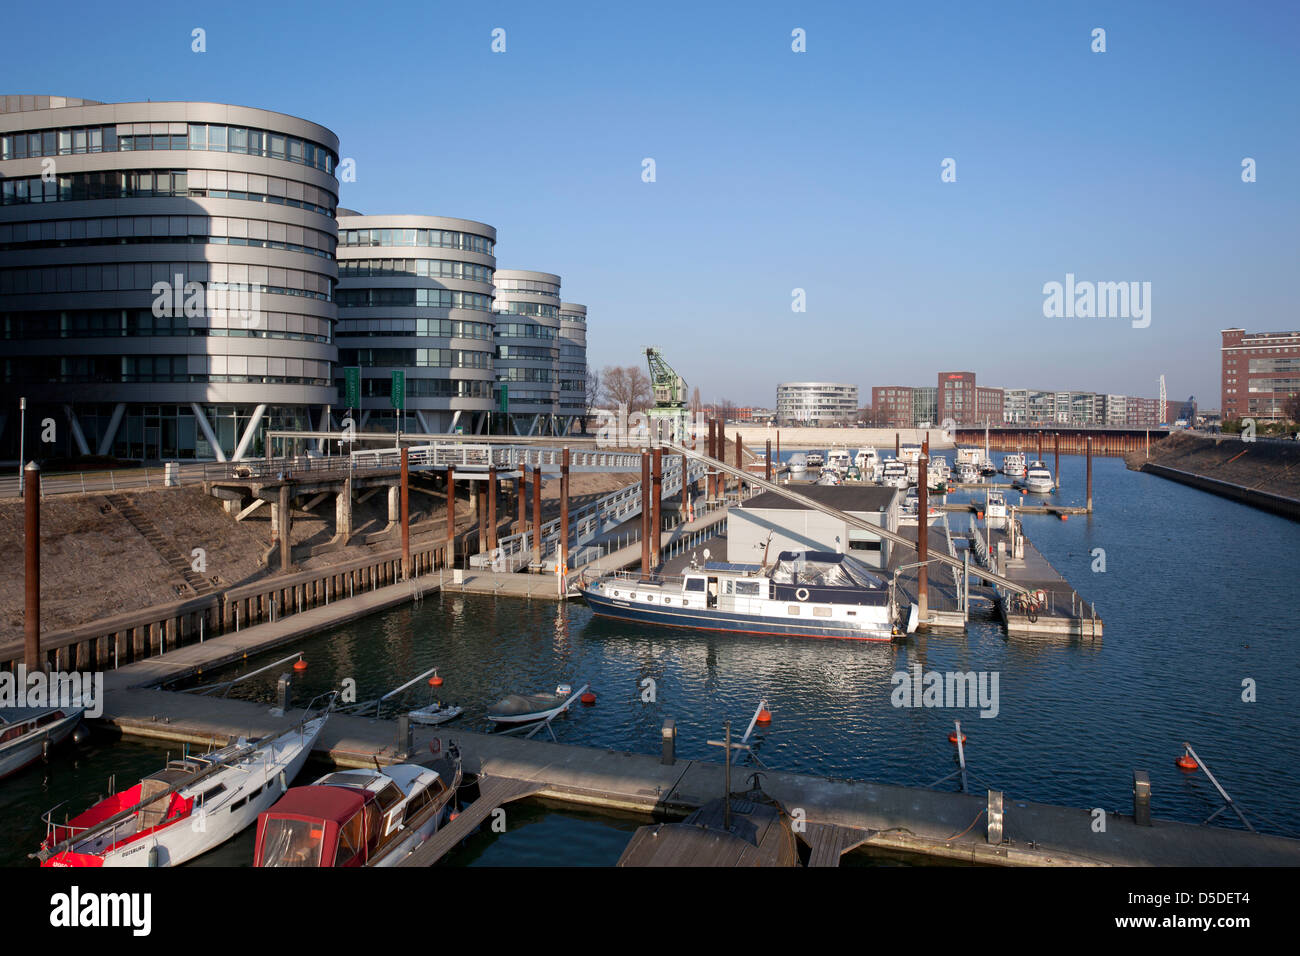 Duisburg, North Rhine-Westphalia, Germany, Duisburg's inner harbor with the Gebaeudekomplex Five Boats and Marina Stock Photo